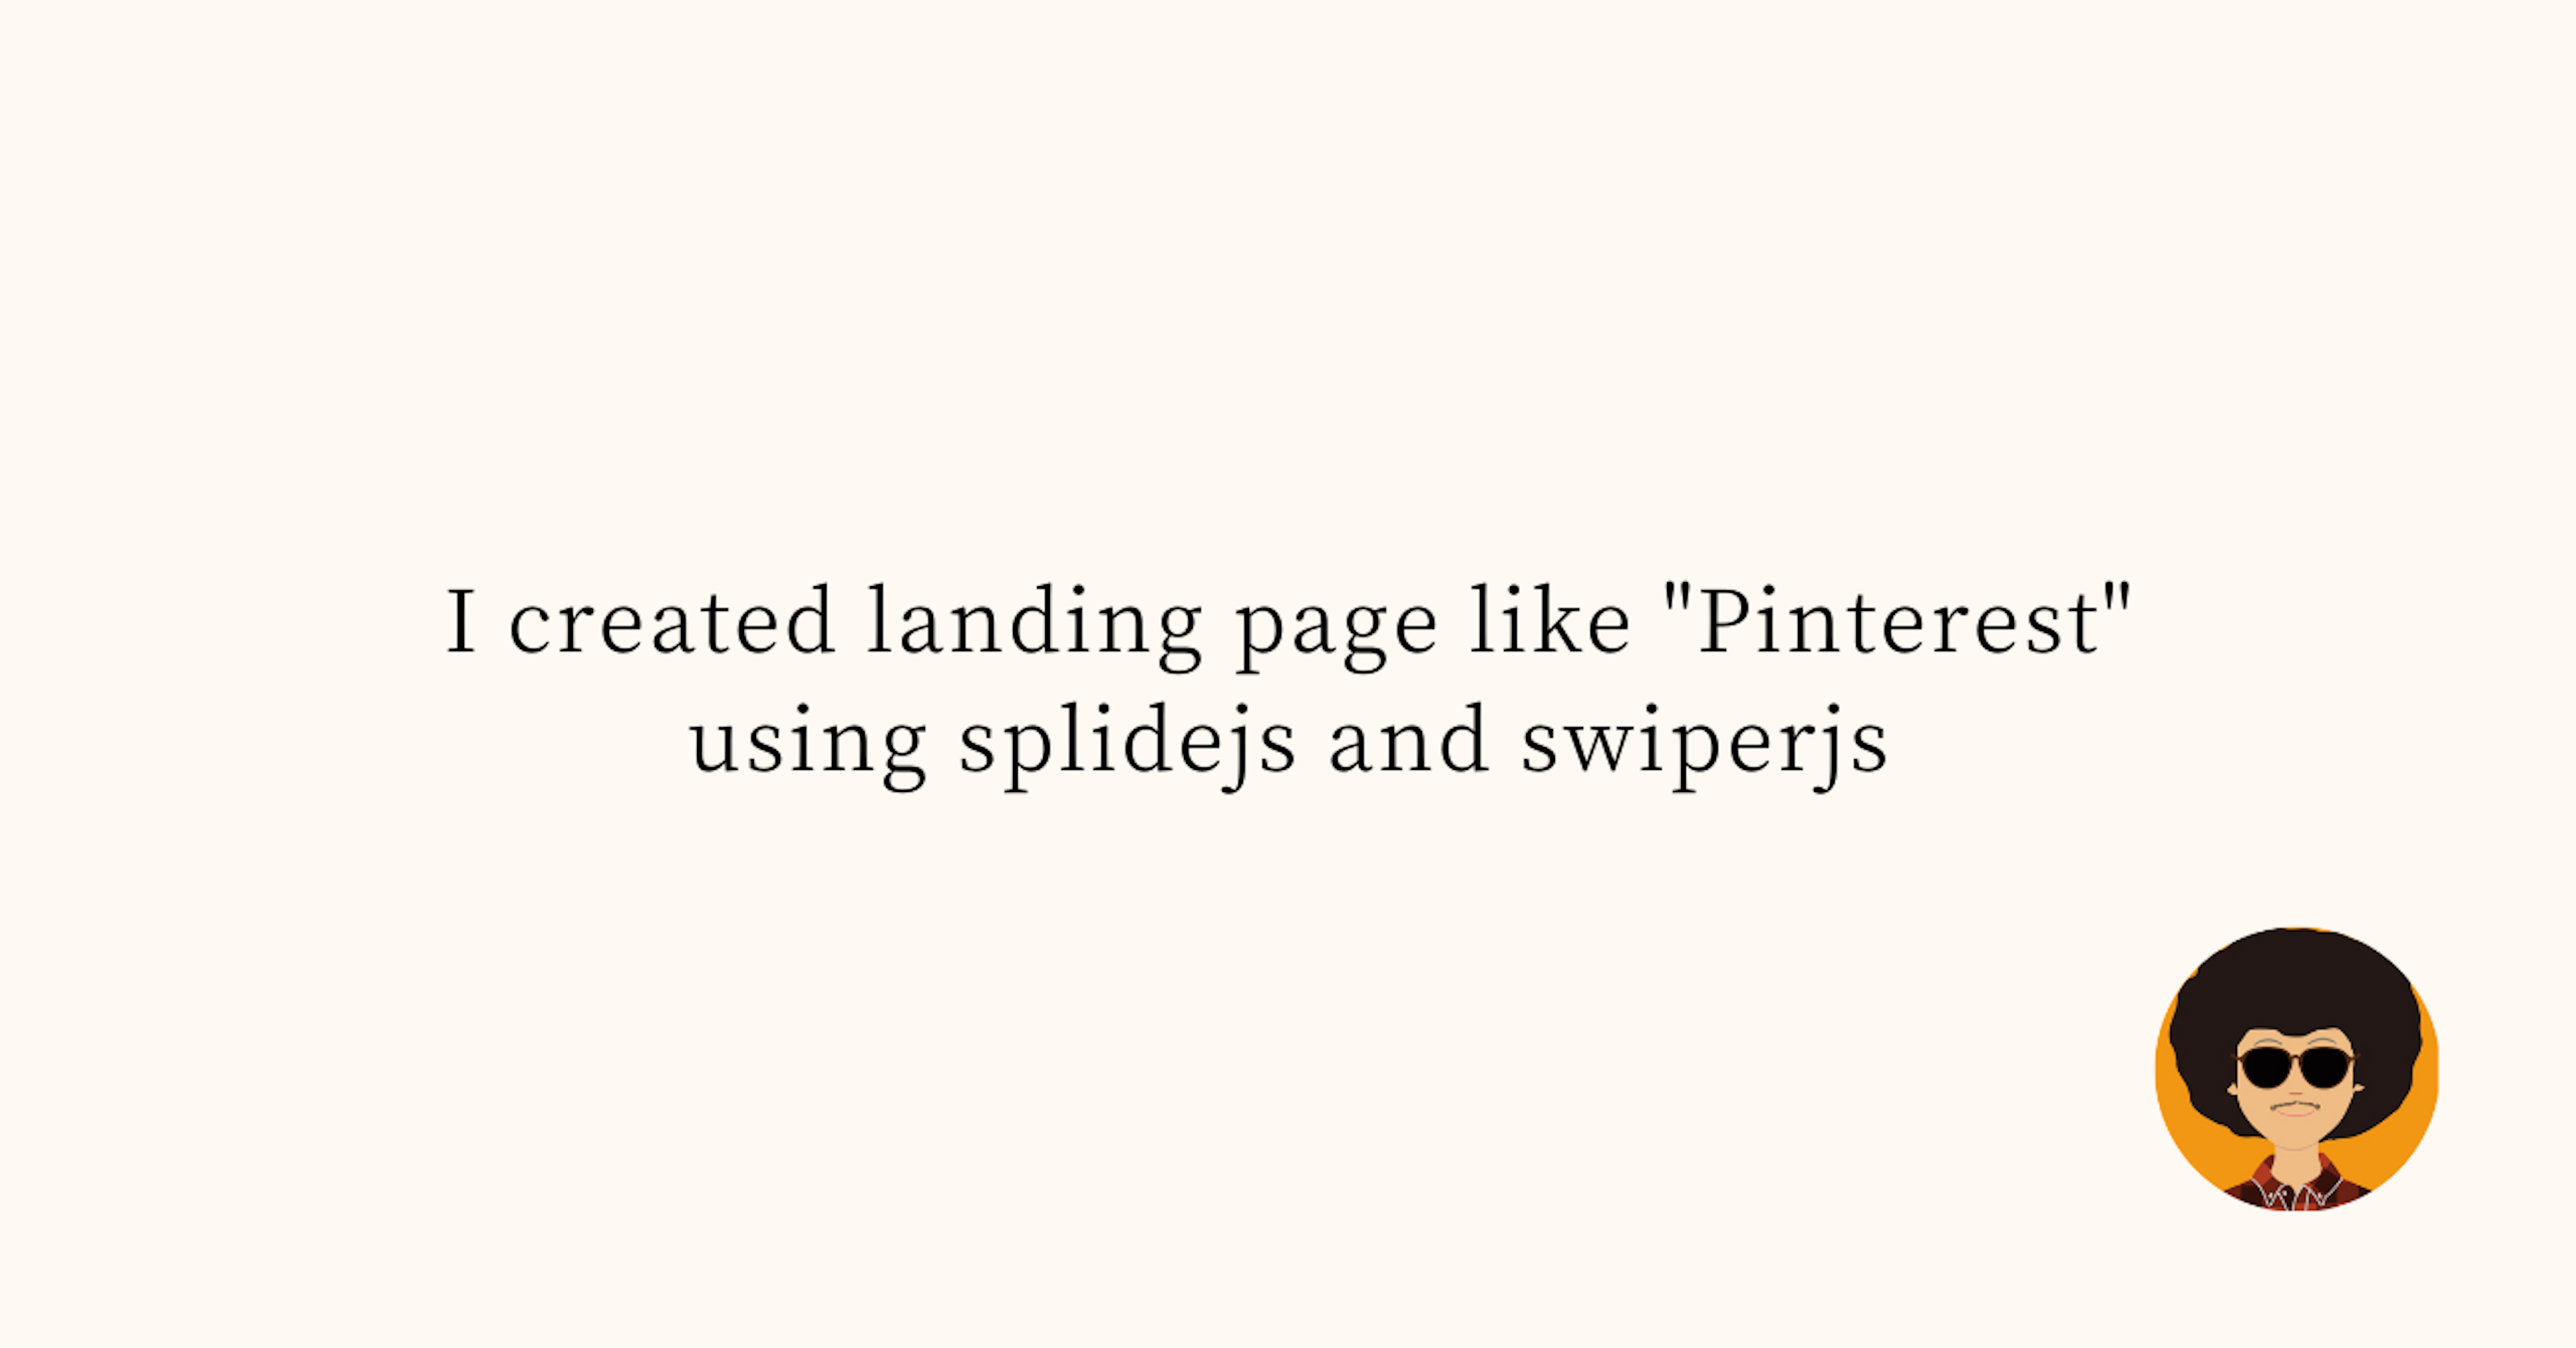 I created landing page like "Pinterest" using splidejs and swiperjs